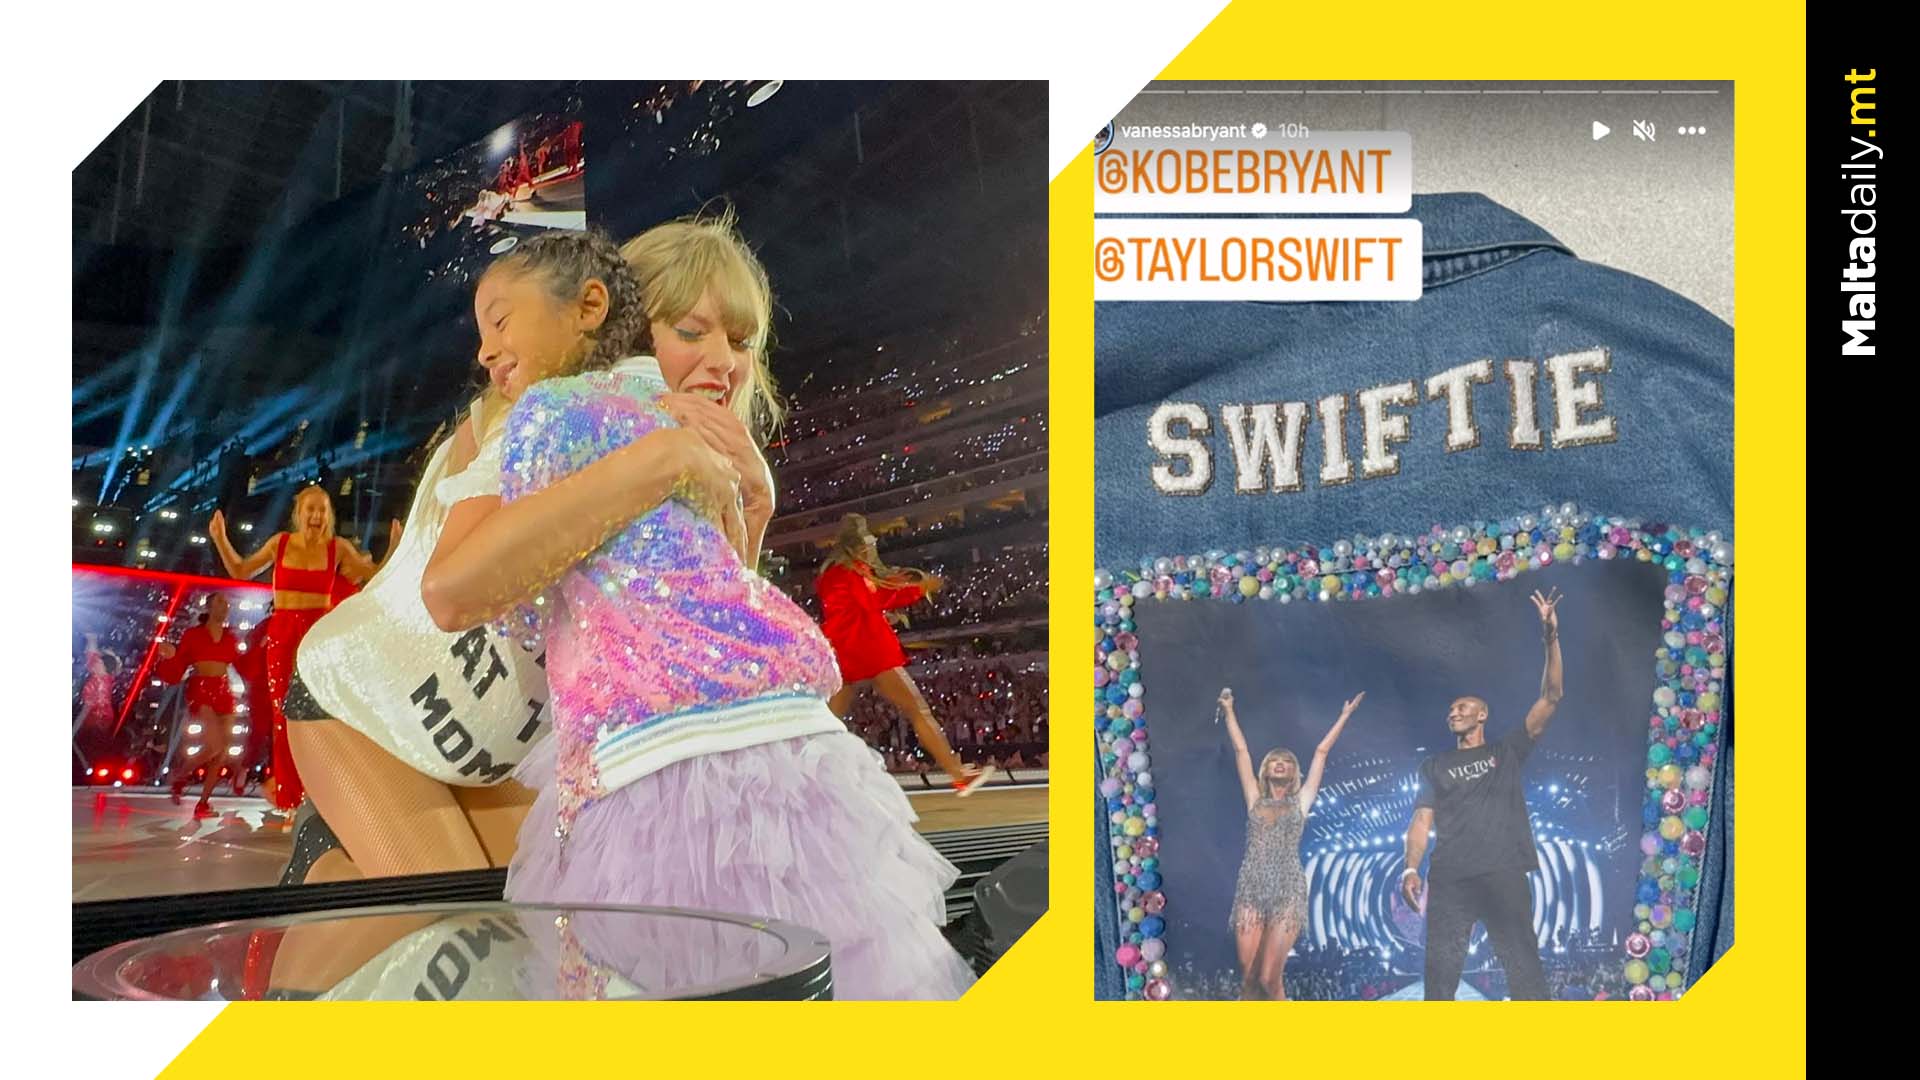 Taylor Swift Gifts & Hugs Kobe Bryant's Daughter During Tour